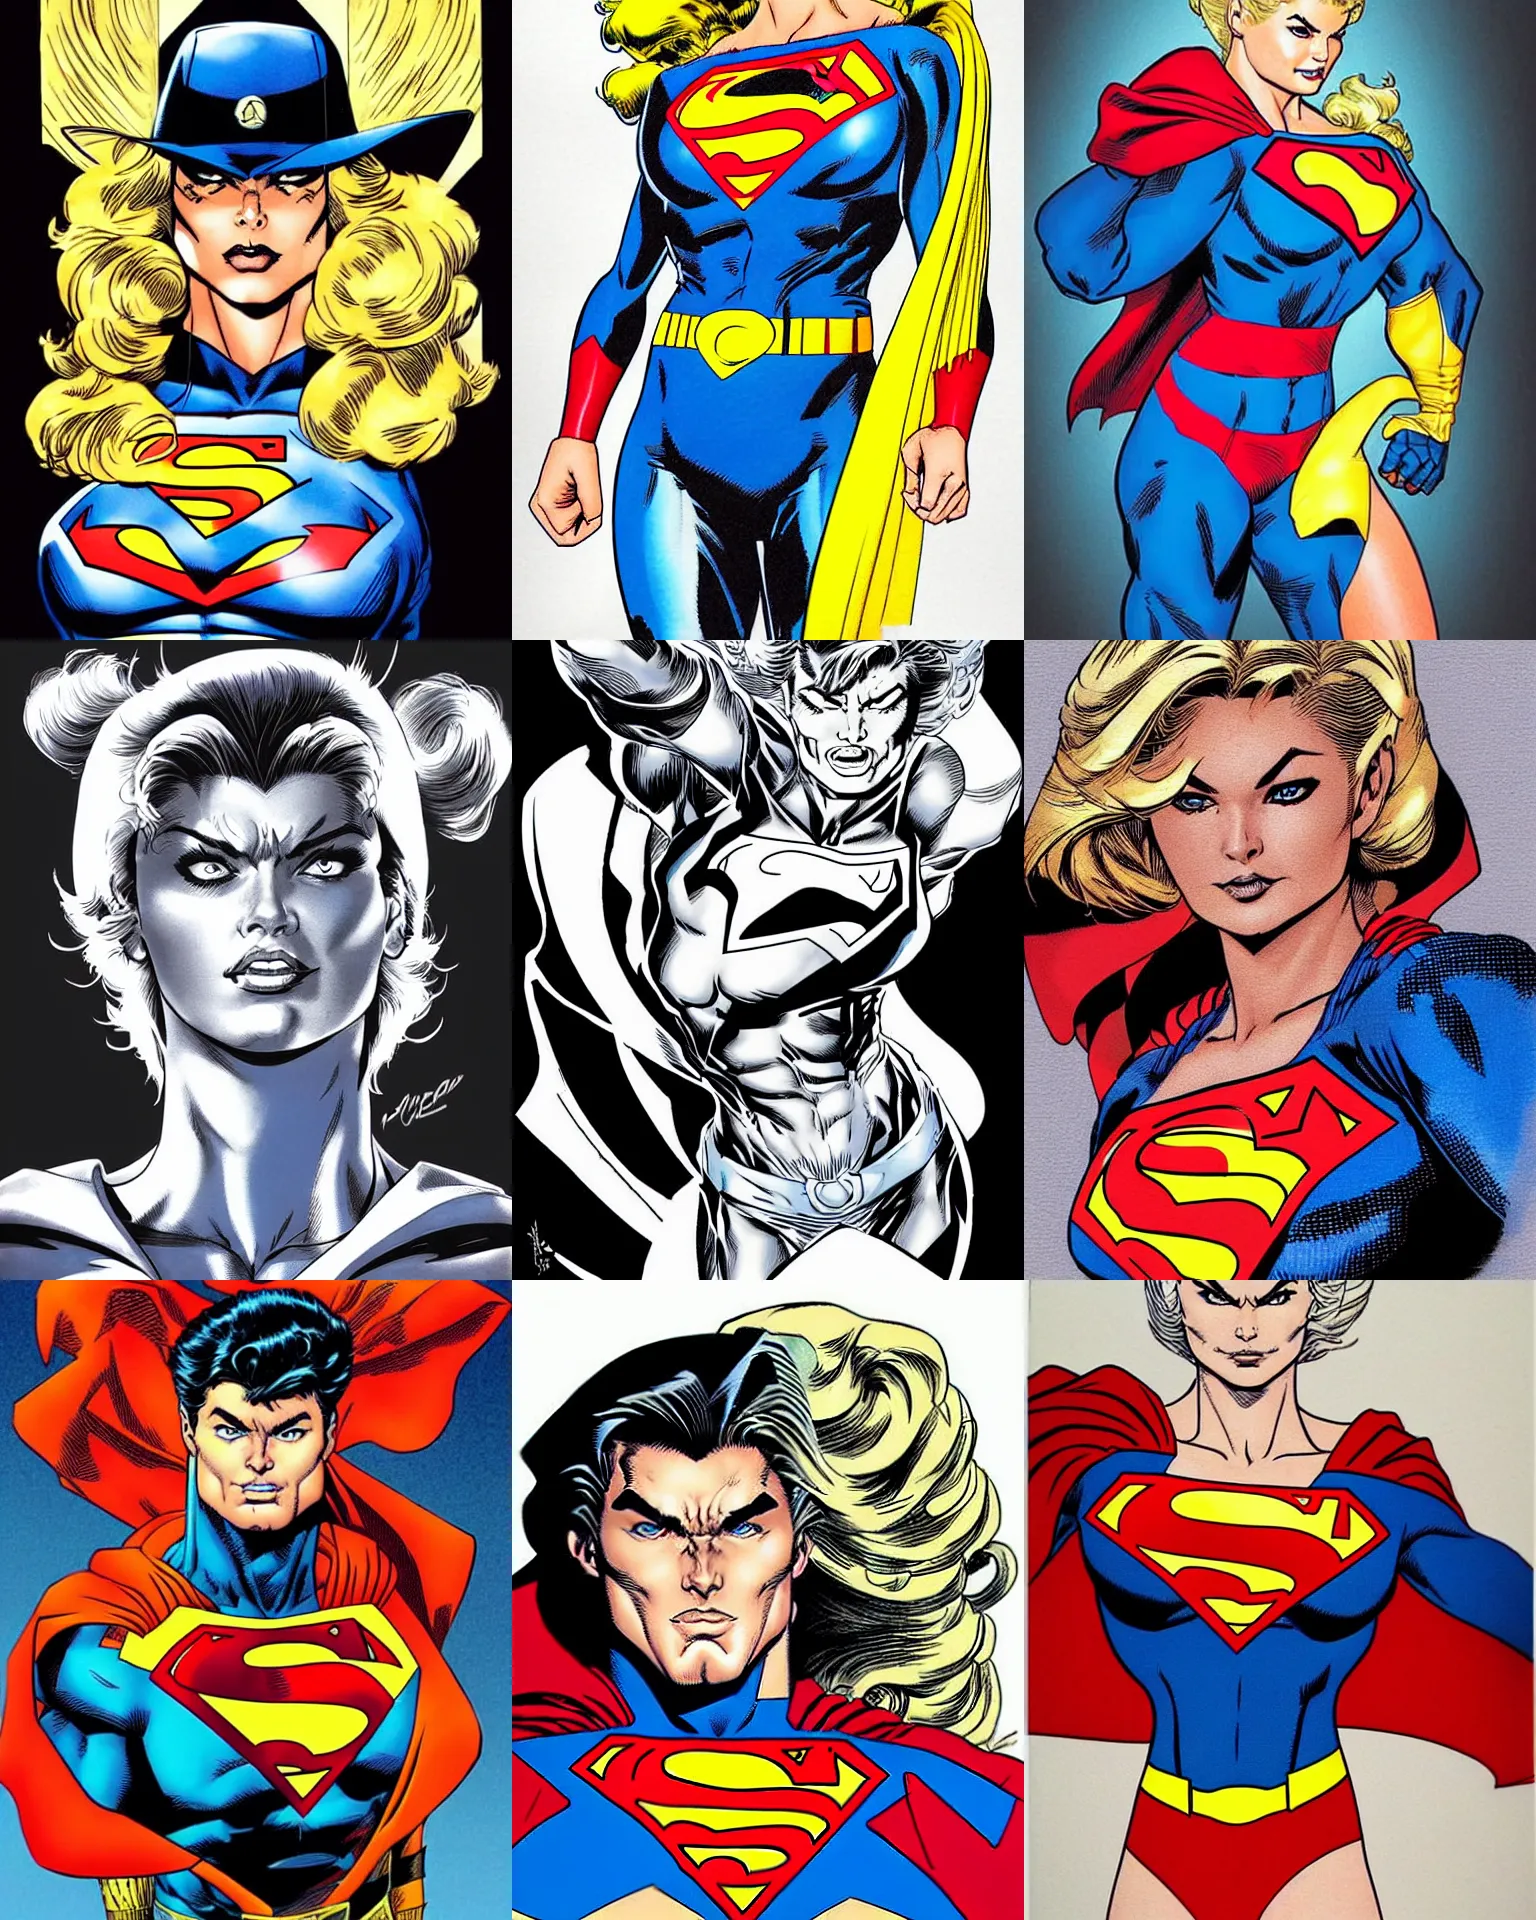 Prompt: erika eleniak!!! jim lee!!! flat ink sketch by jim lee face close up headshot superman costume in the style of jim lee, x - men superhero comic book character by jim lee